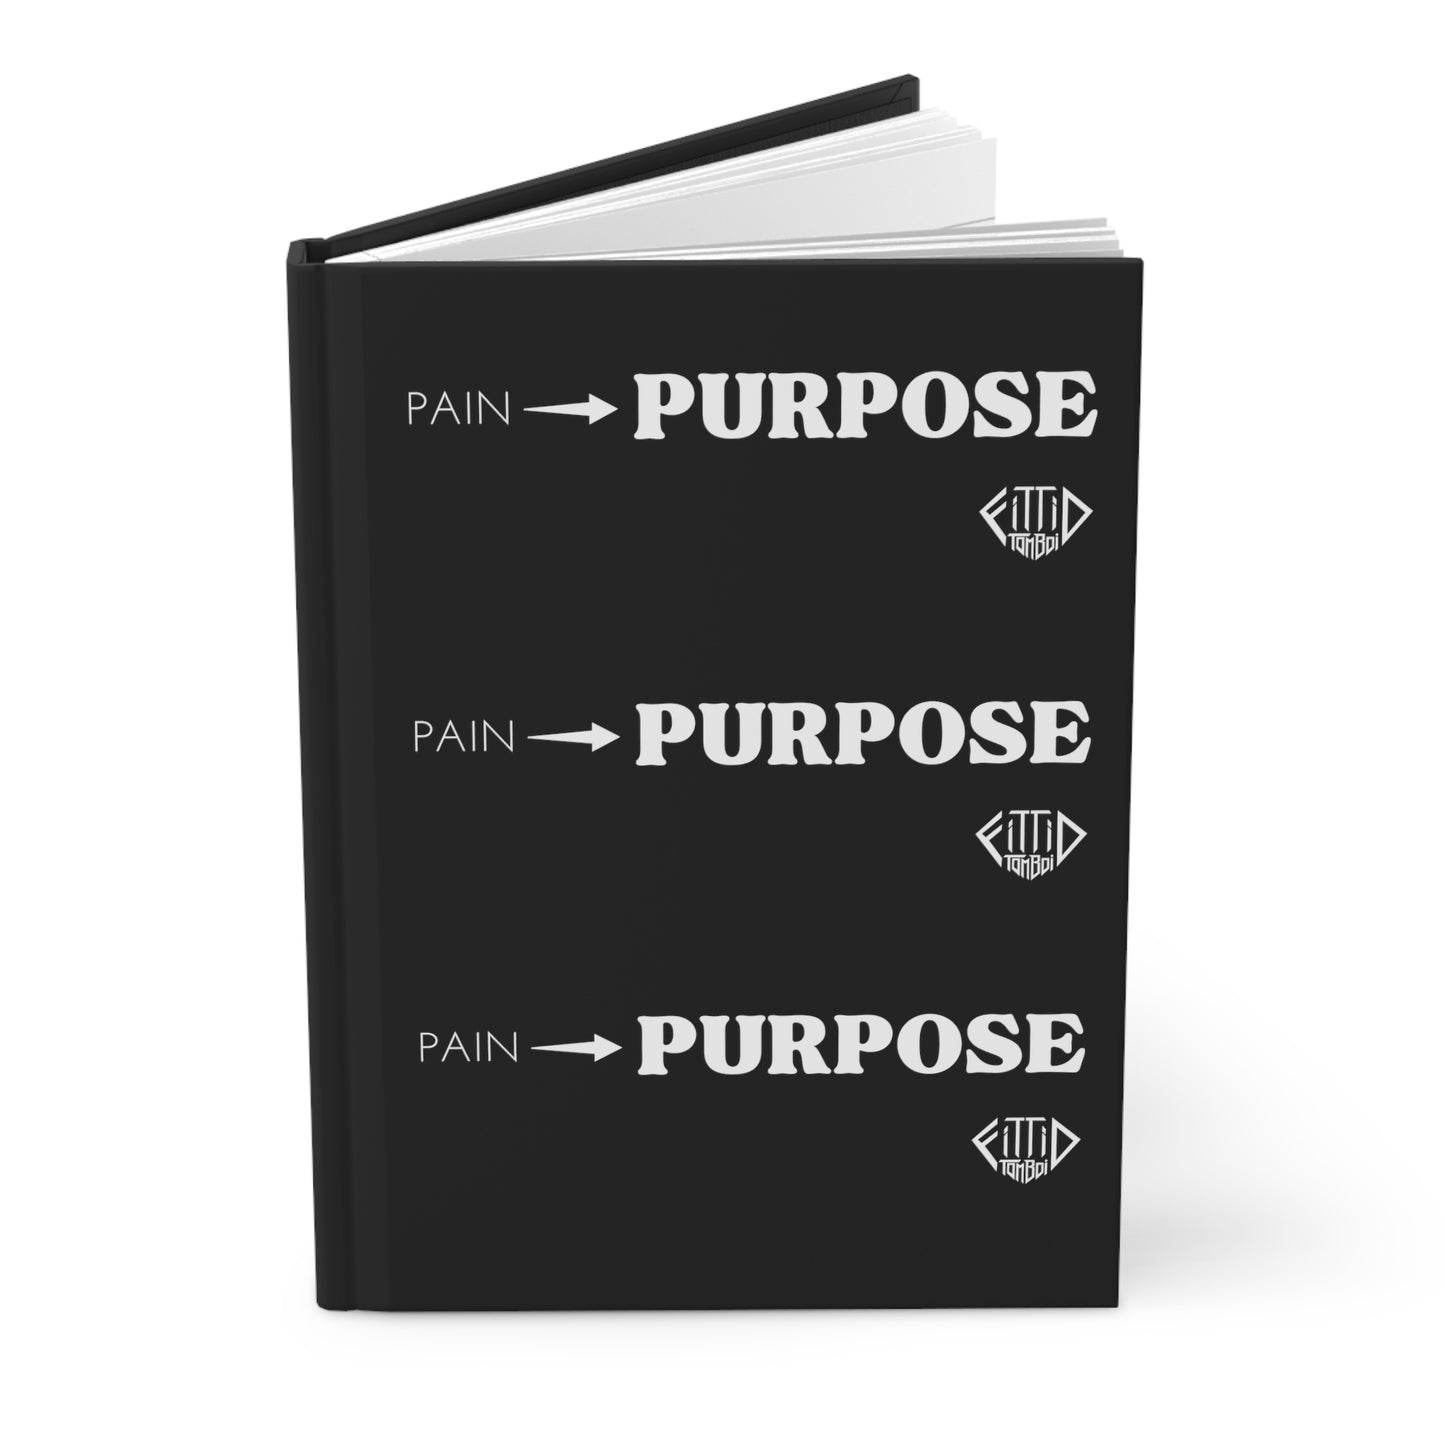 Pain into PURPOSE Journal Hardcover - Black